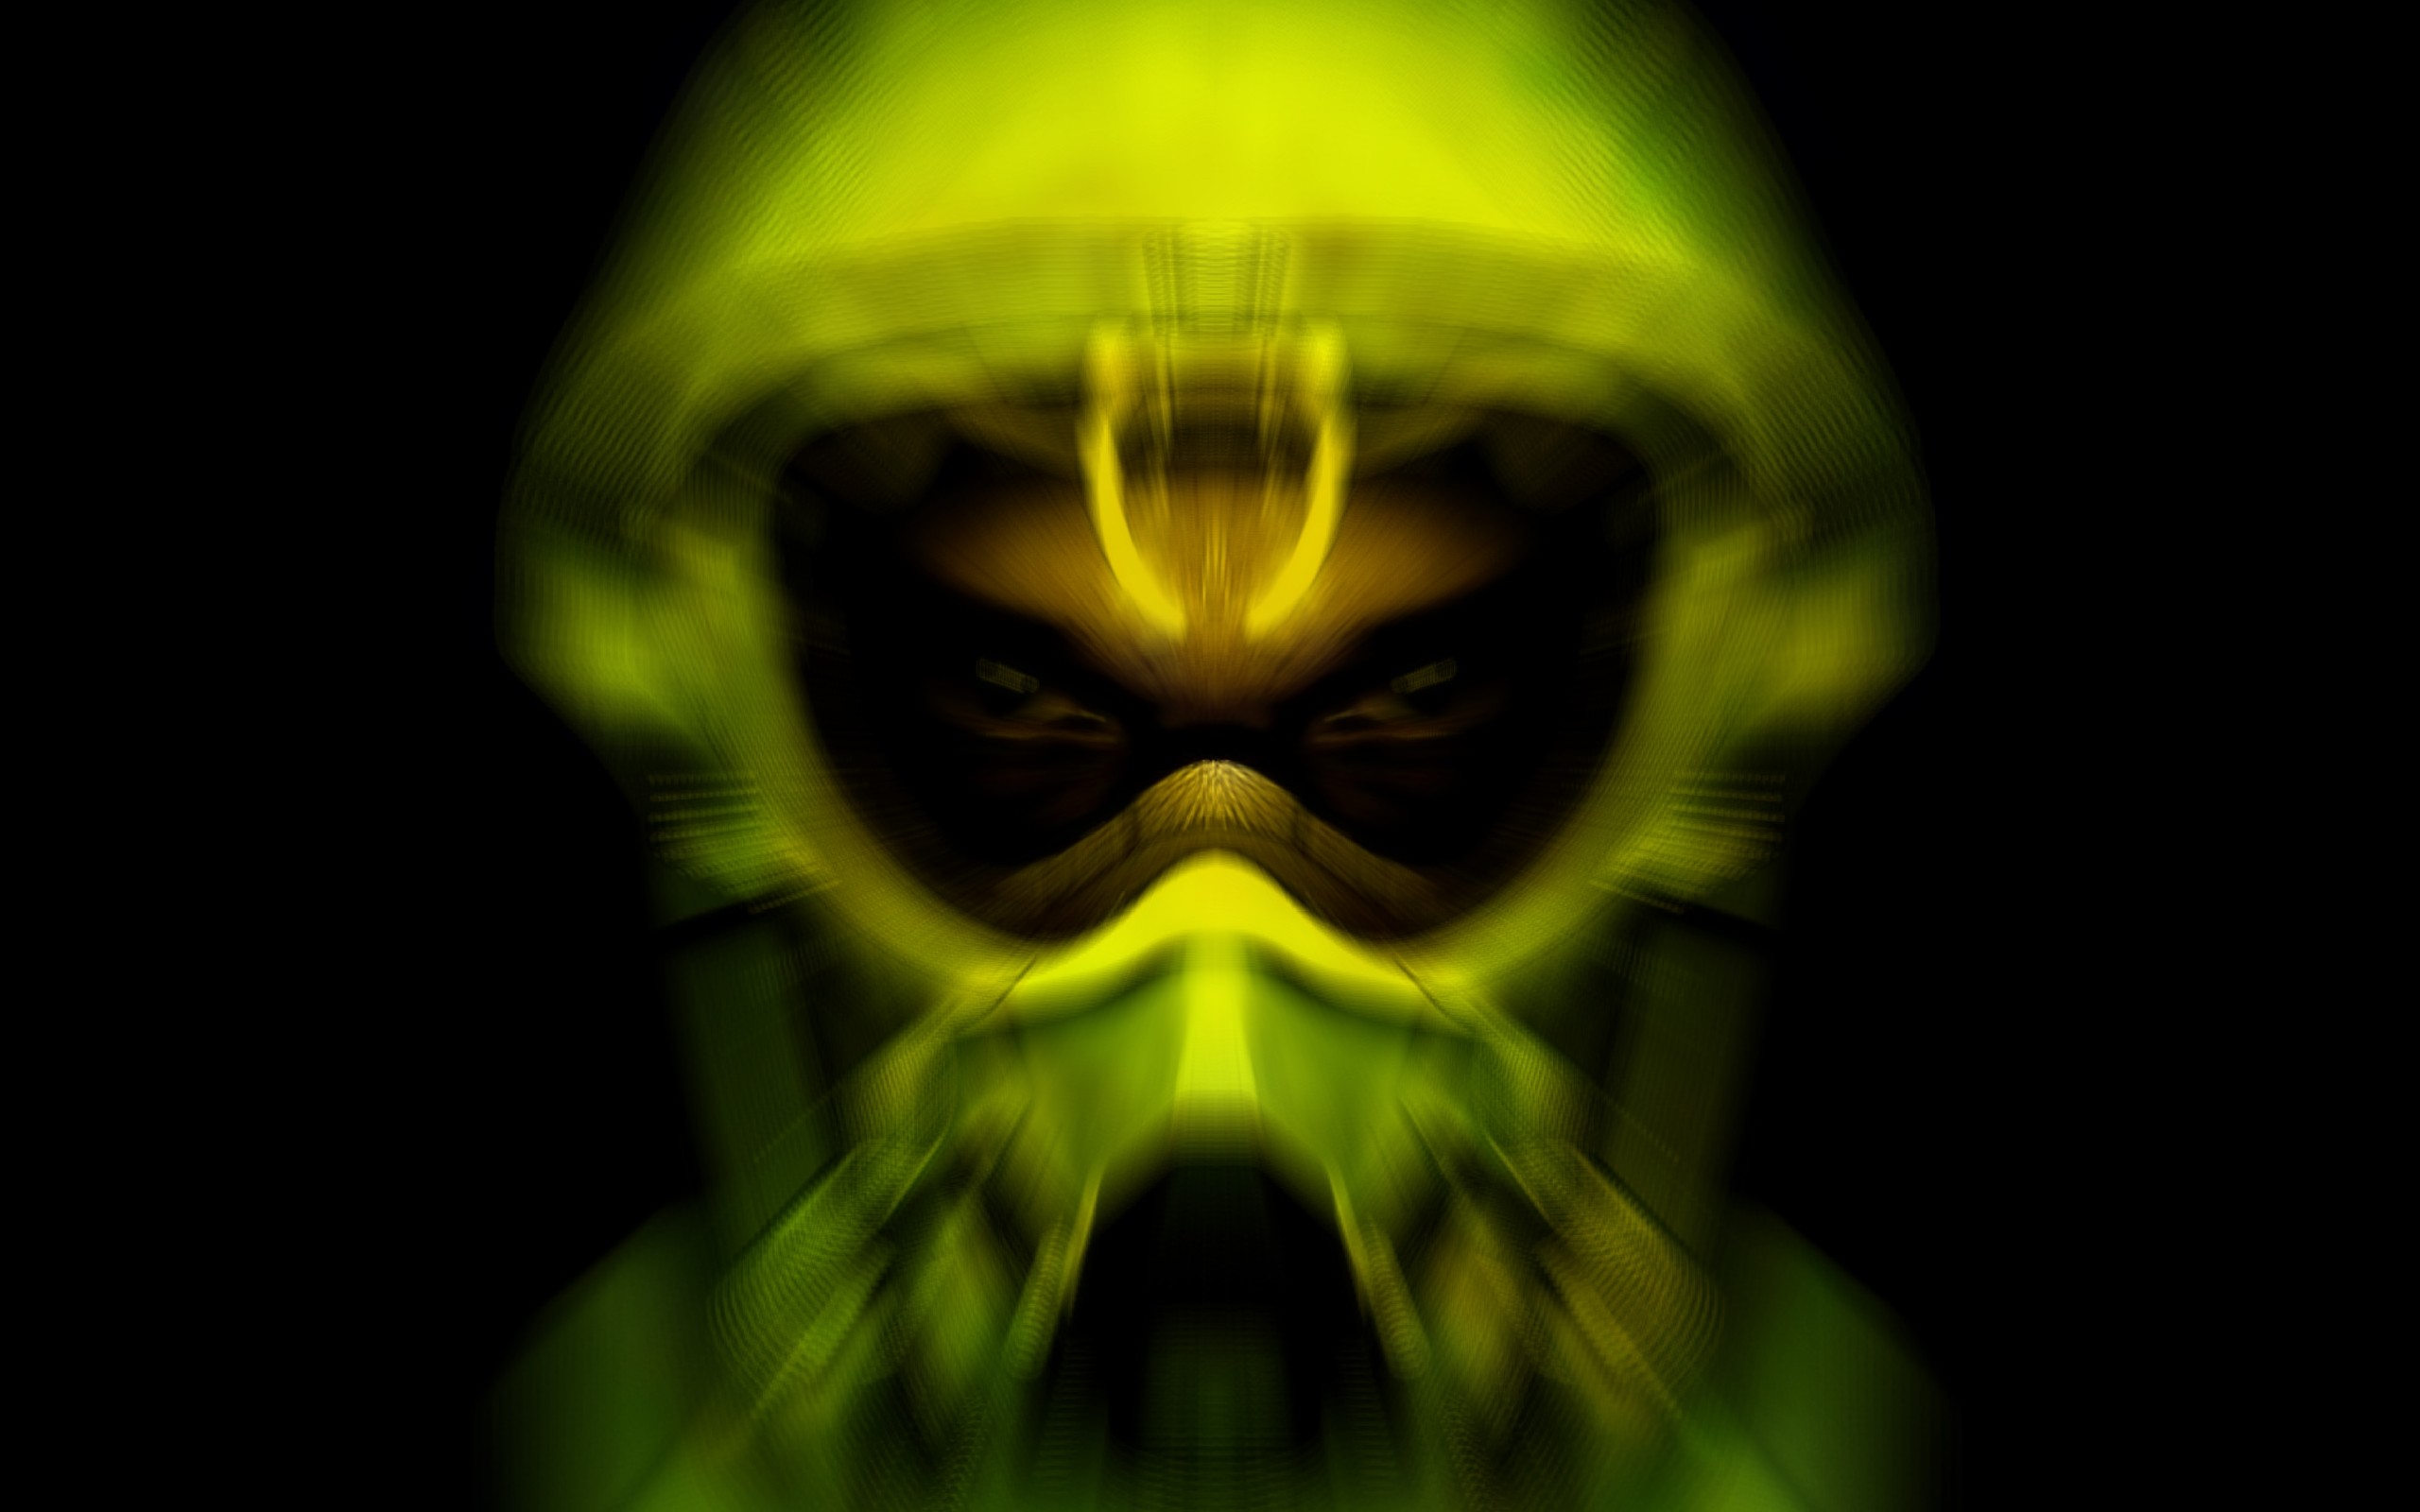 Austin Yellow Distortion Digital Art Mask 2560x1600